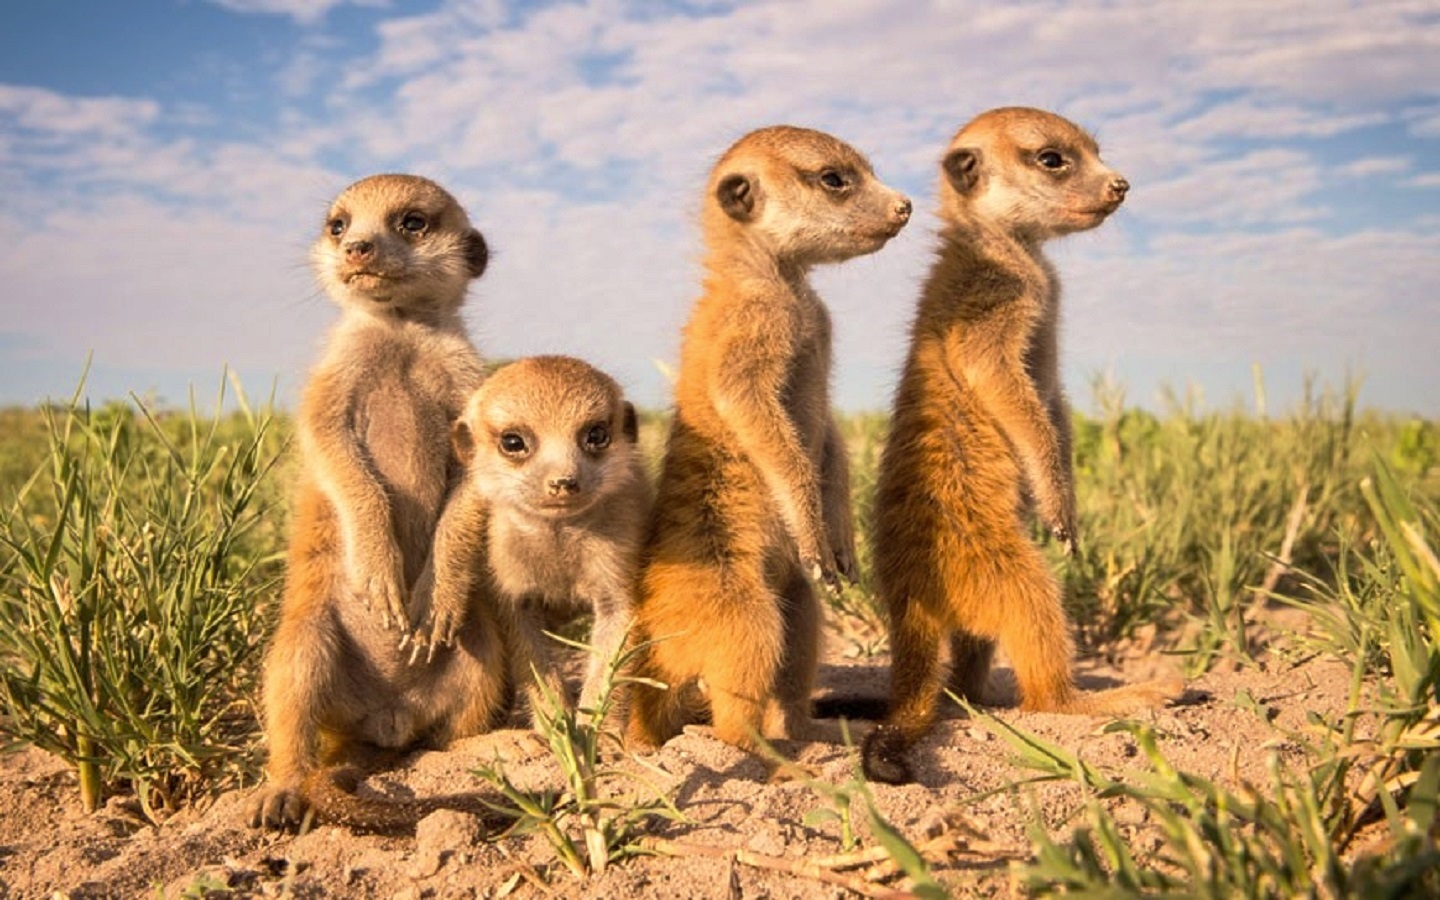 Small meerkats